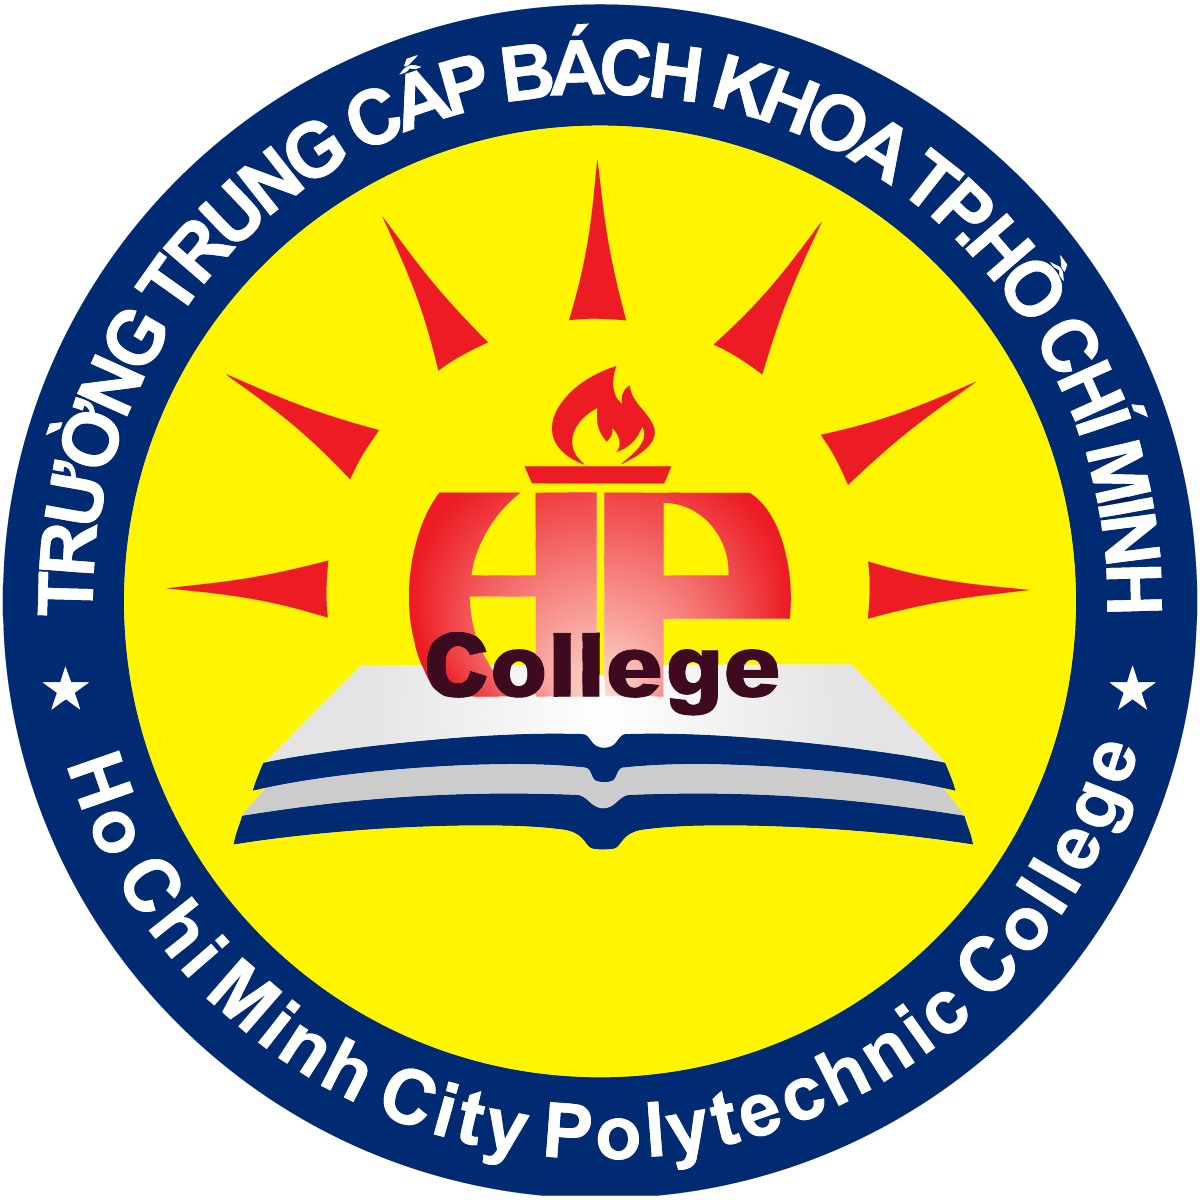 Logo Truong Trung cap Bach khoa Tp